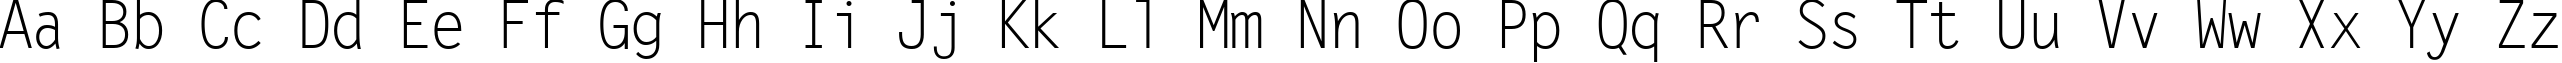 Пример написания английского алфавита шрифтом Letter Gothic